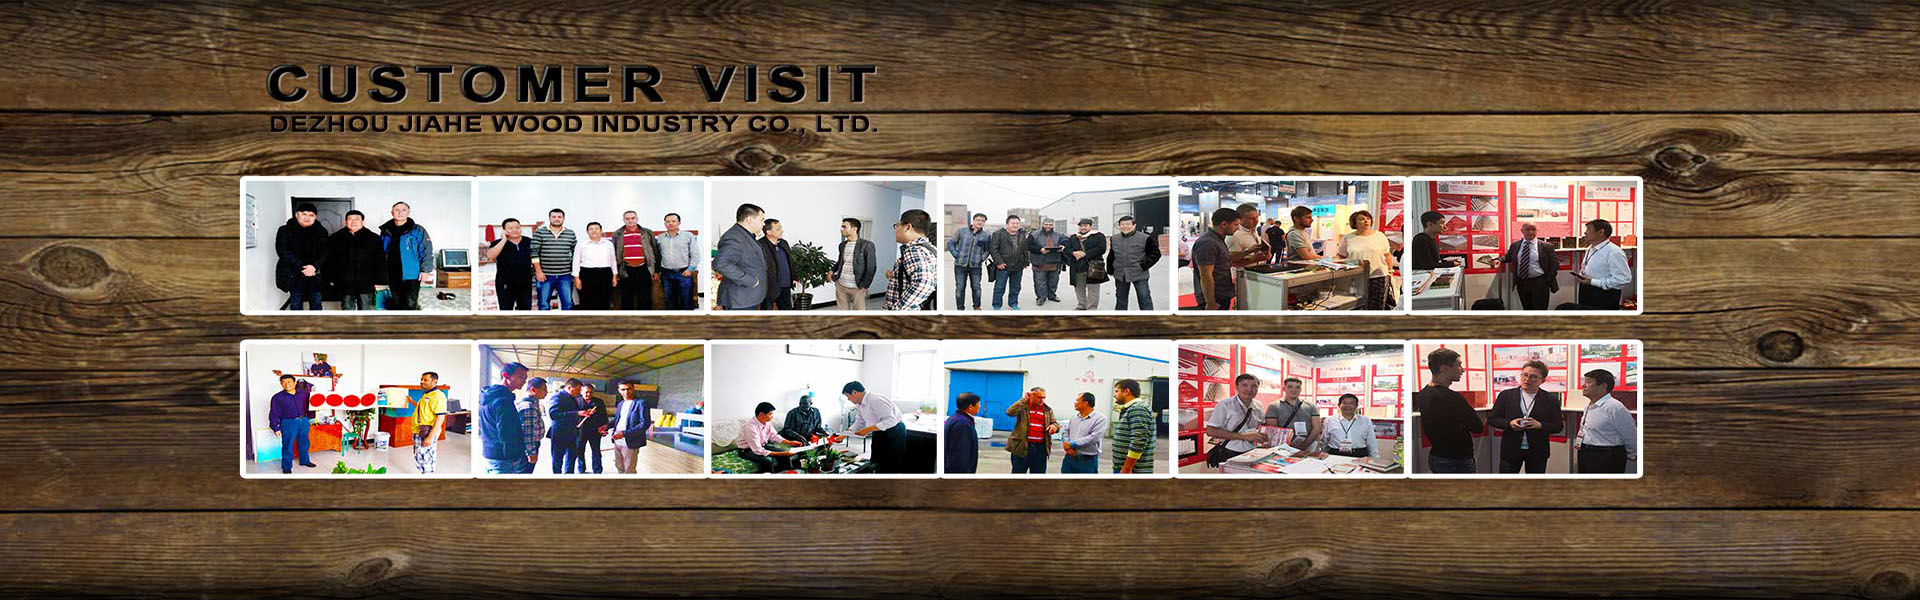 Dezhou Jiahe Wood Industry Co.,Ltd